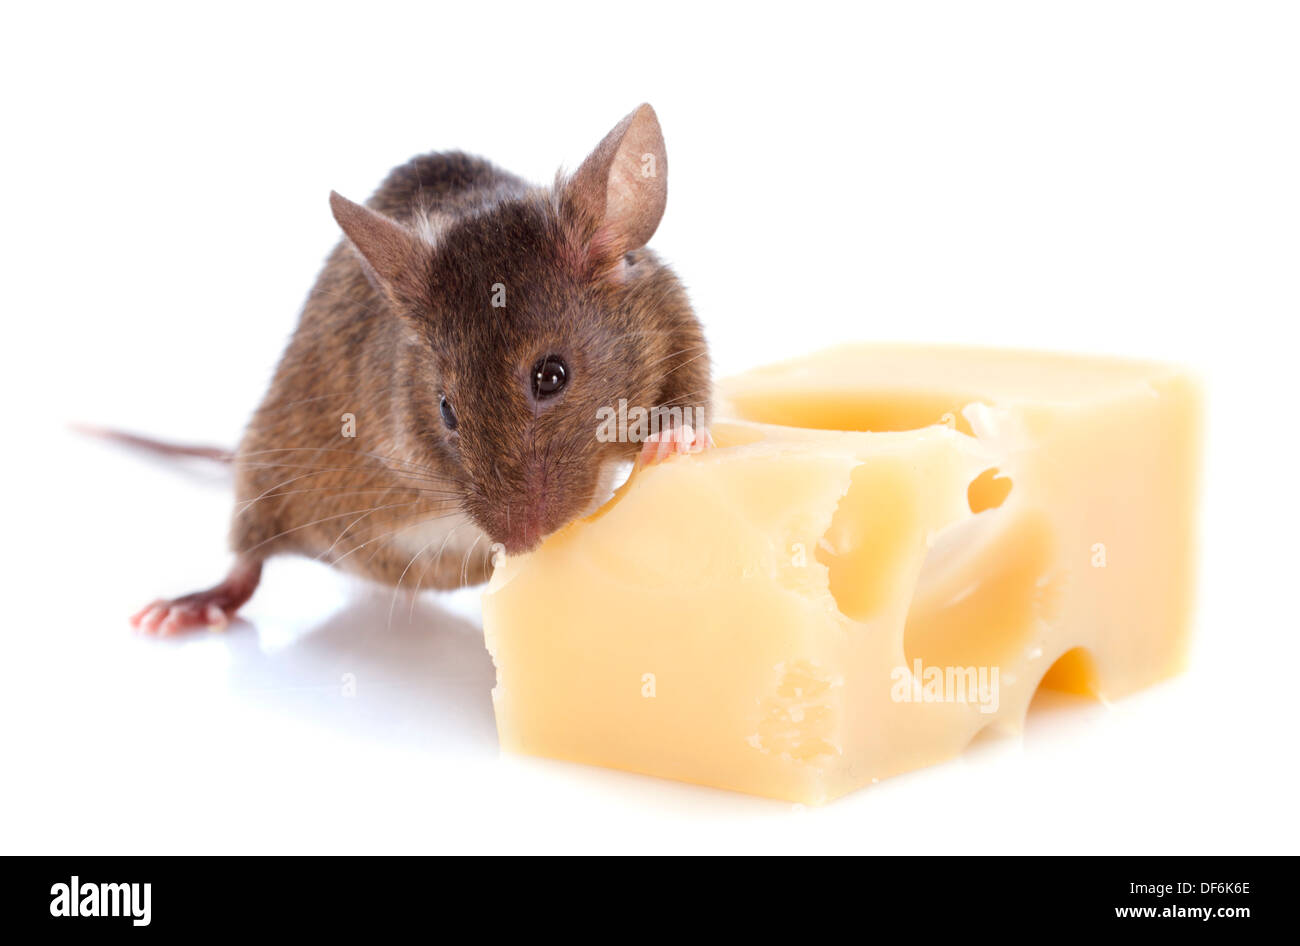 La souris et le fromage in front of white background Banque D'Images